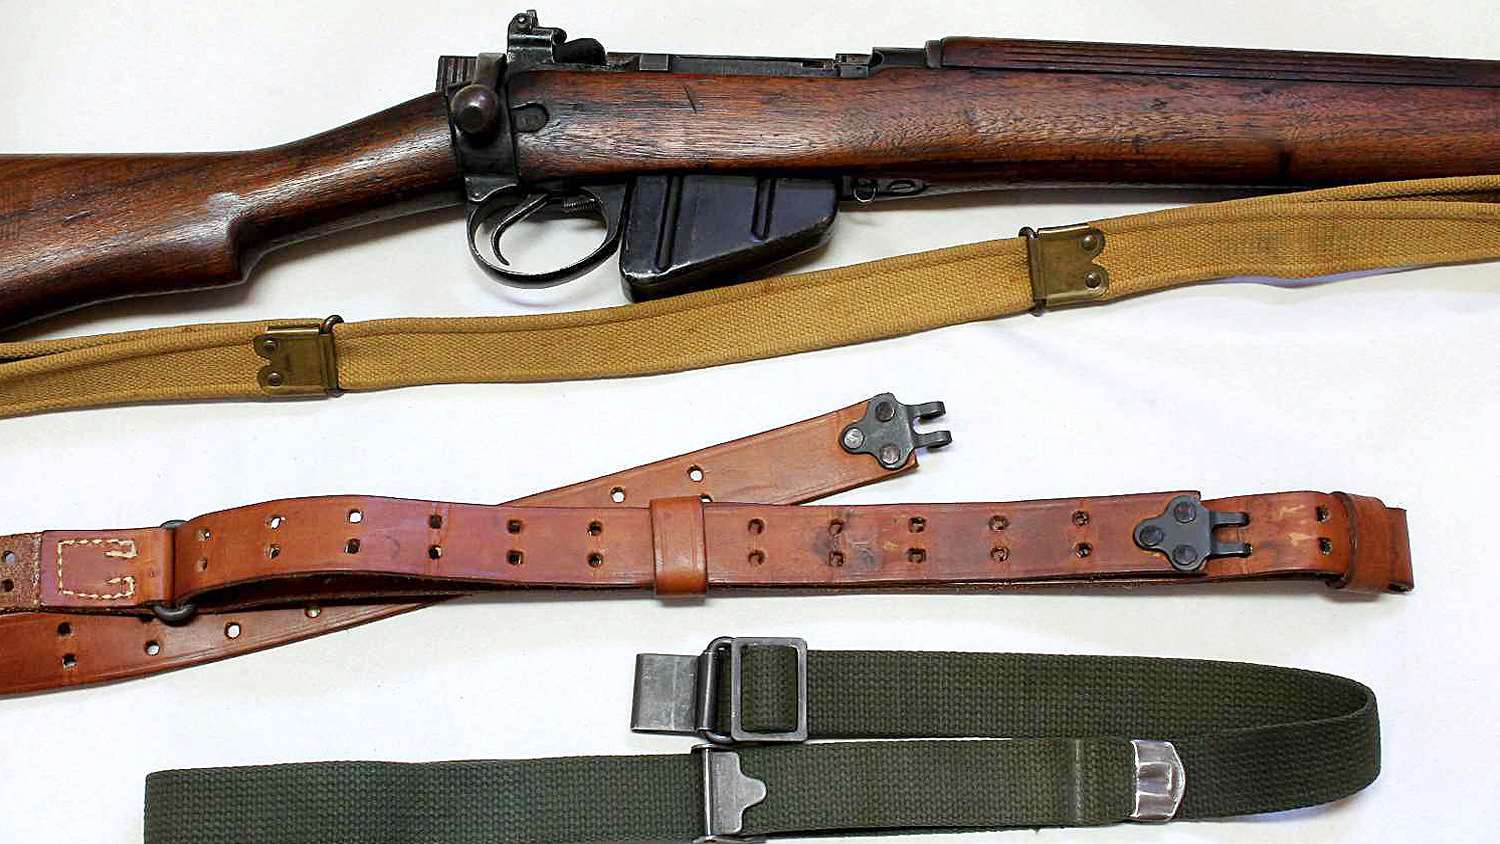 M1907 or M1 web slings for VMRs